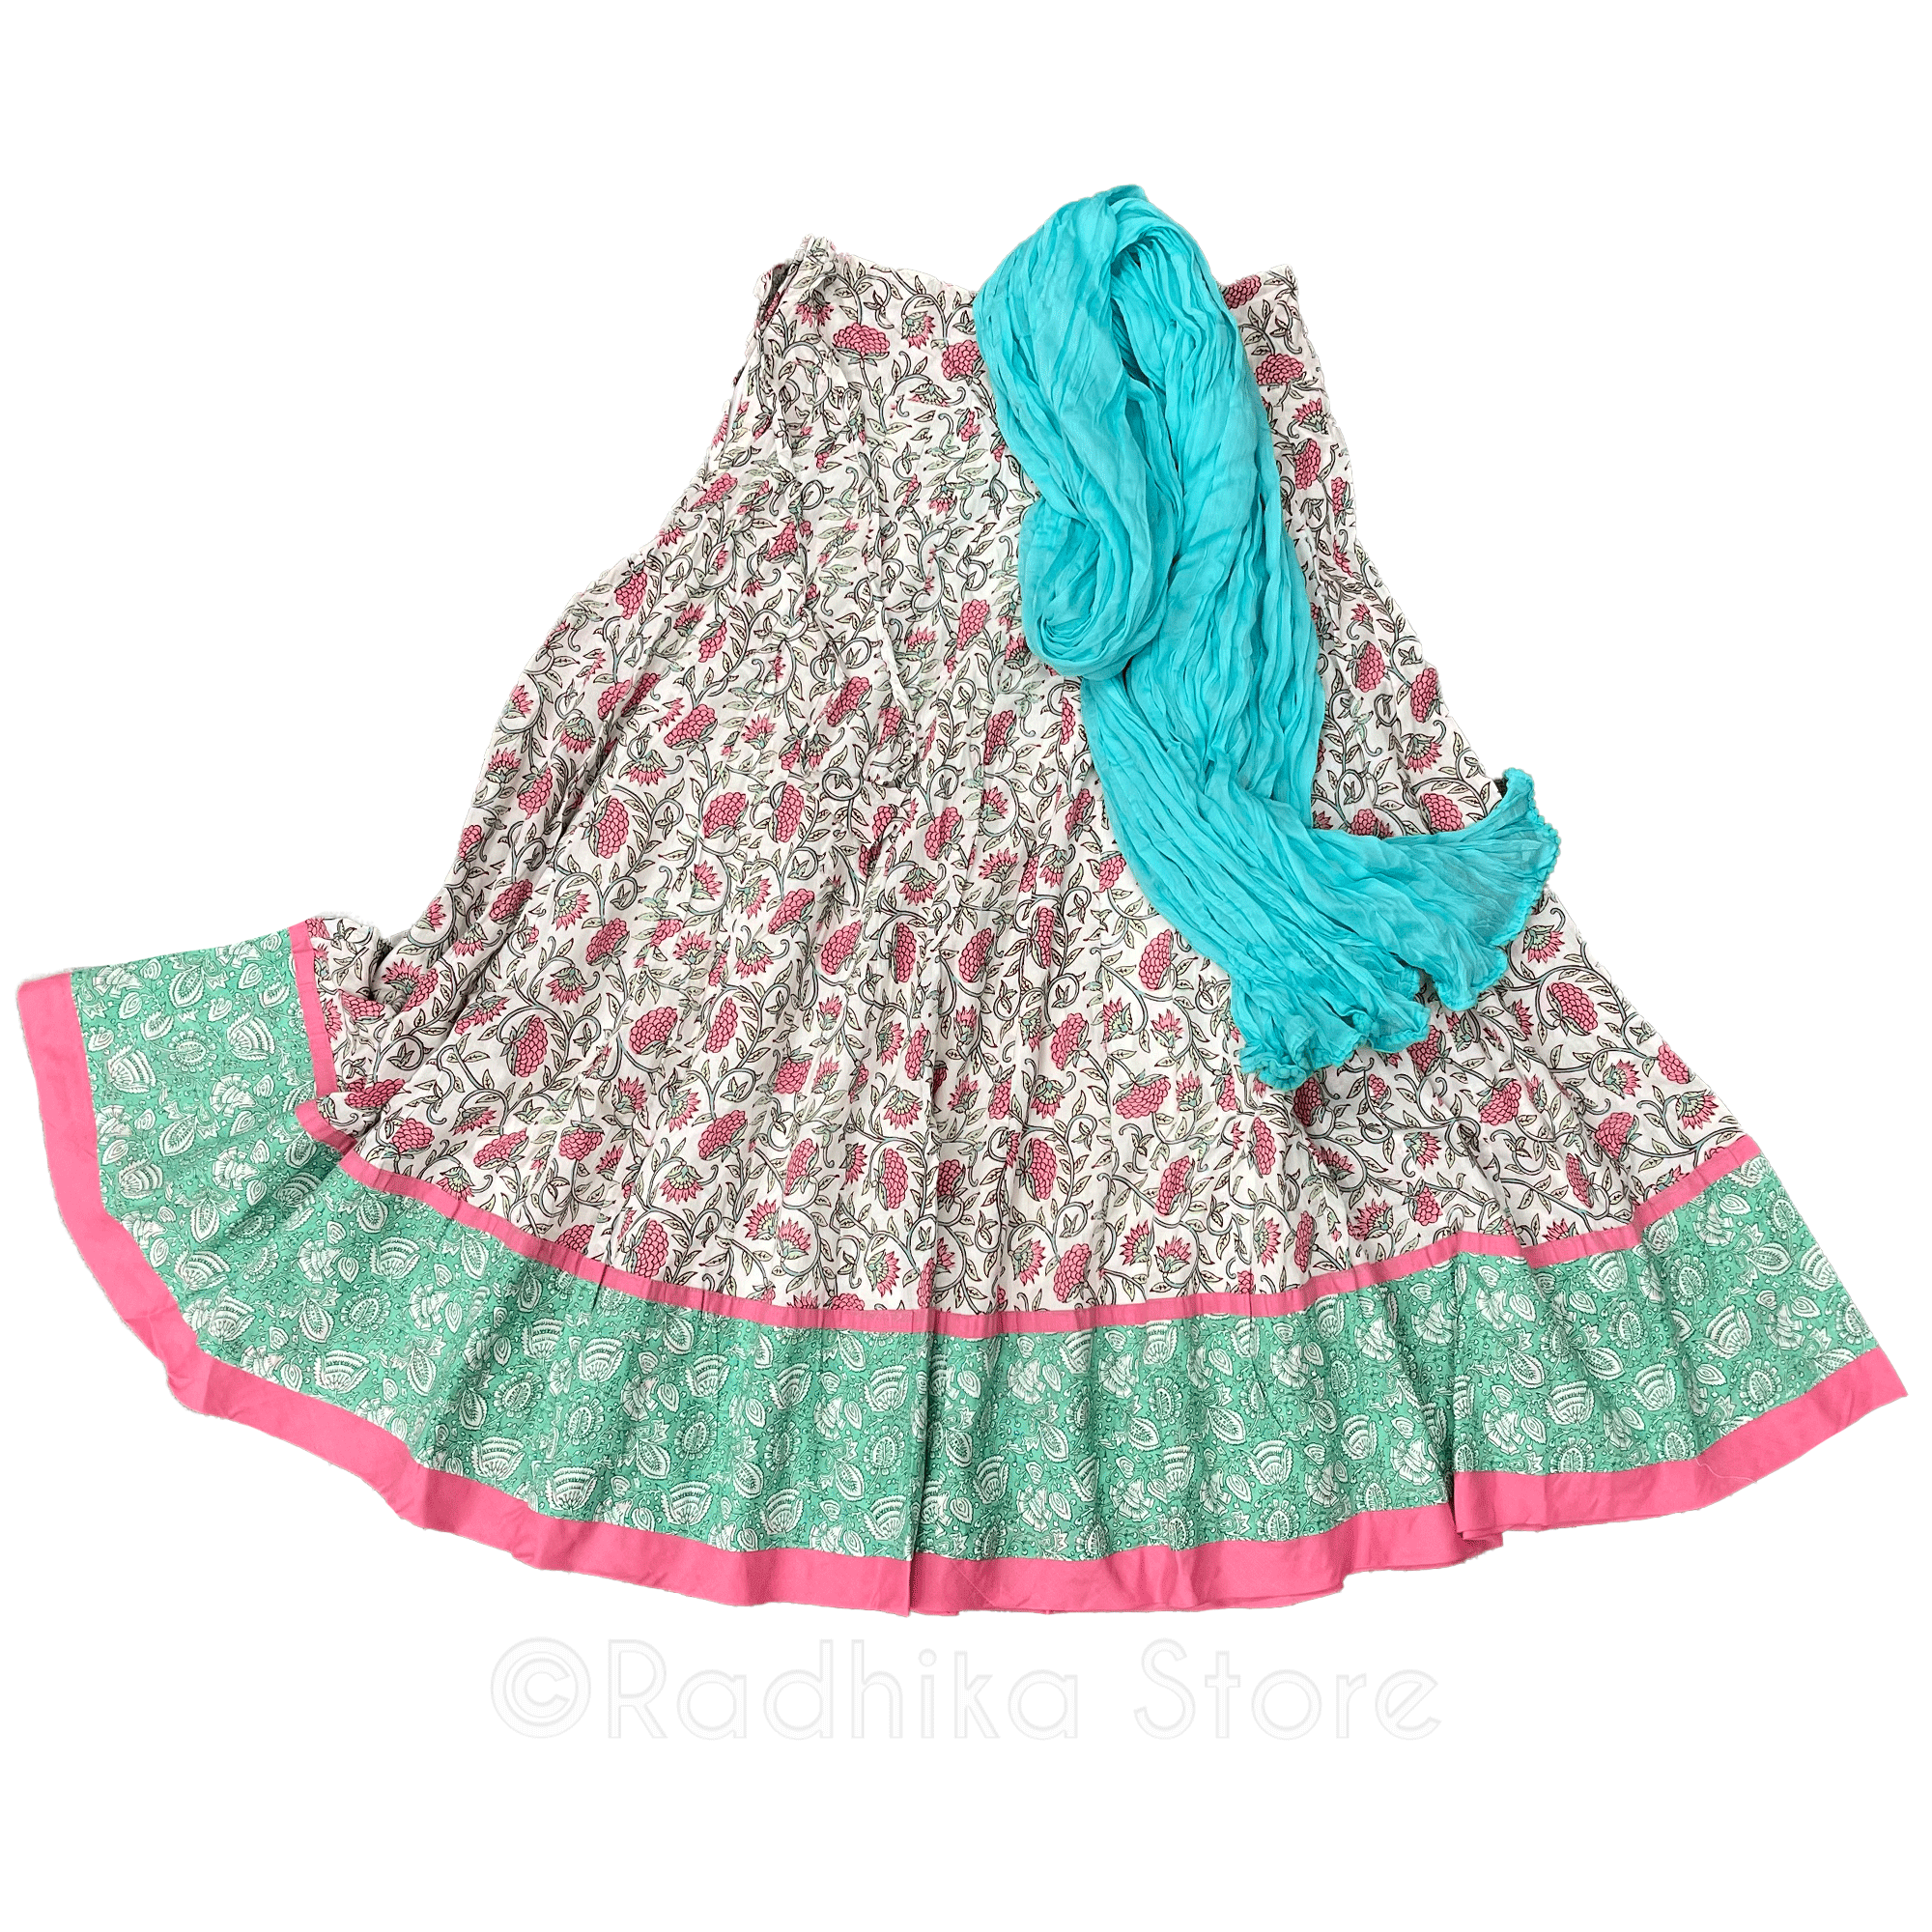 Radhikas Garden -  Gopi Skirt -Pastel Pink and Green - Cotton Screen Print - With Chadar - S-M-L